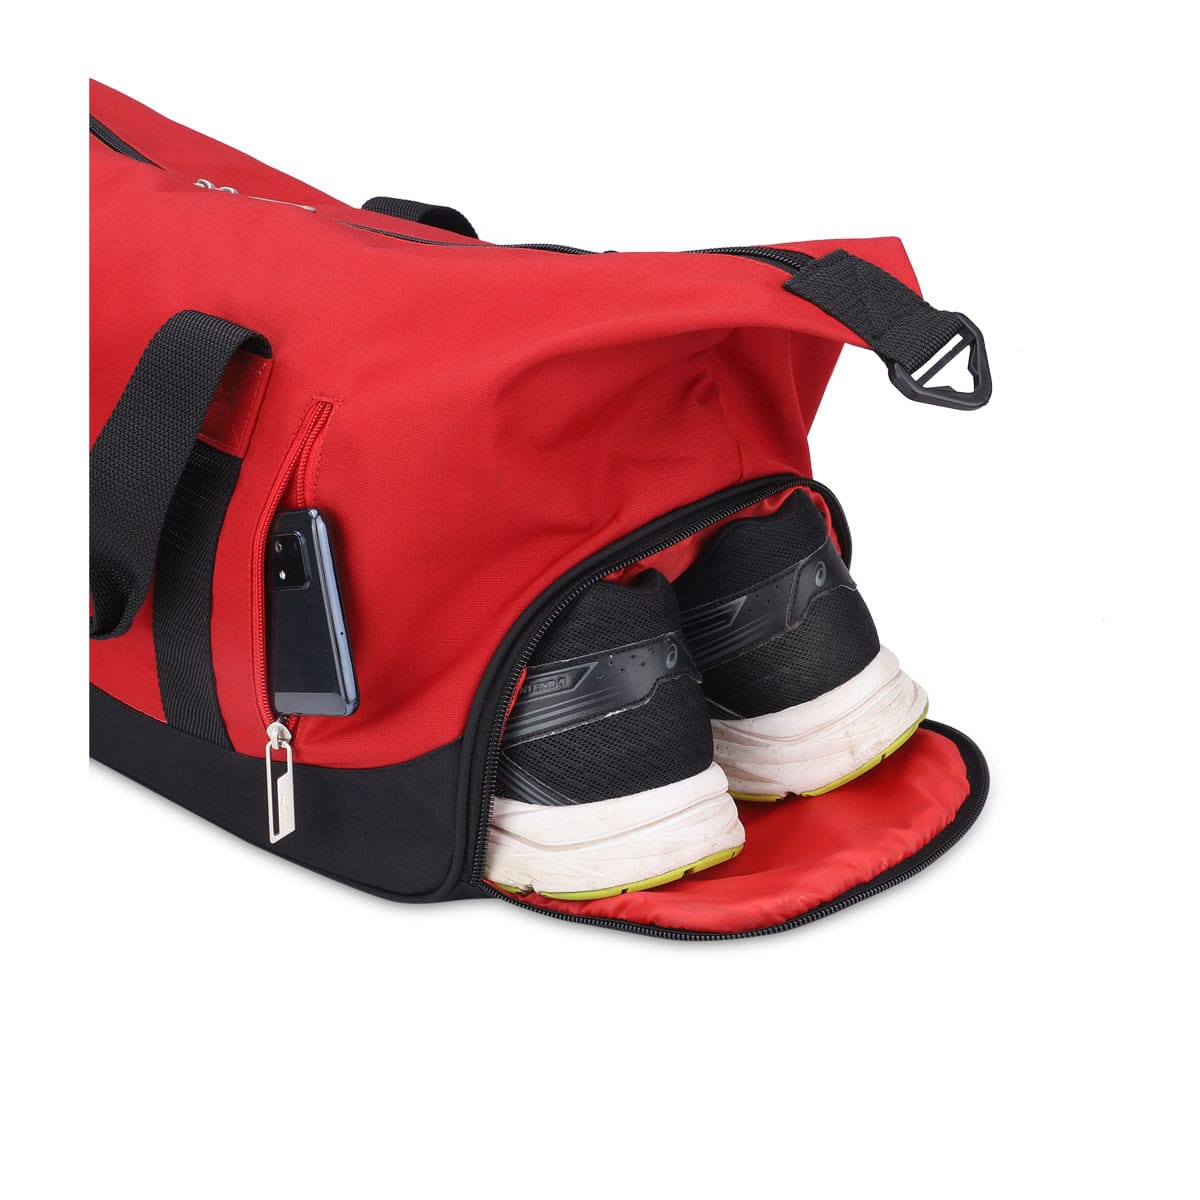 Kohla Track Pro 25l Backpack - Backpacks - Backpacks & Headlamps - Outdoor  - All